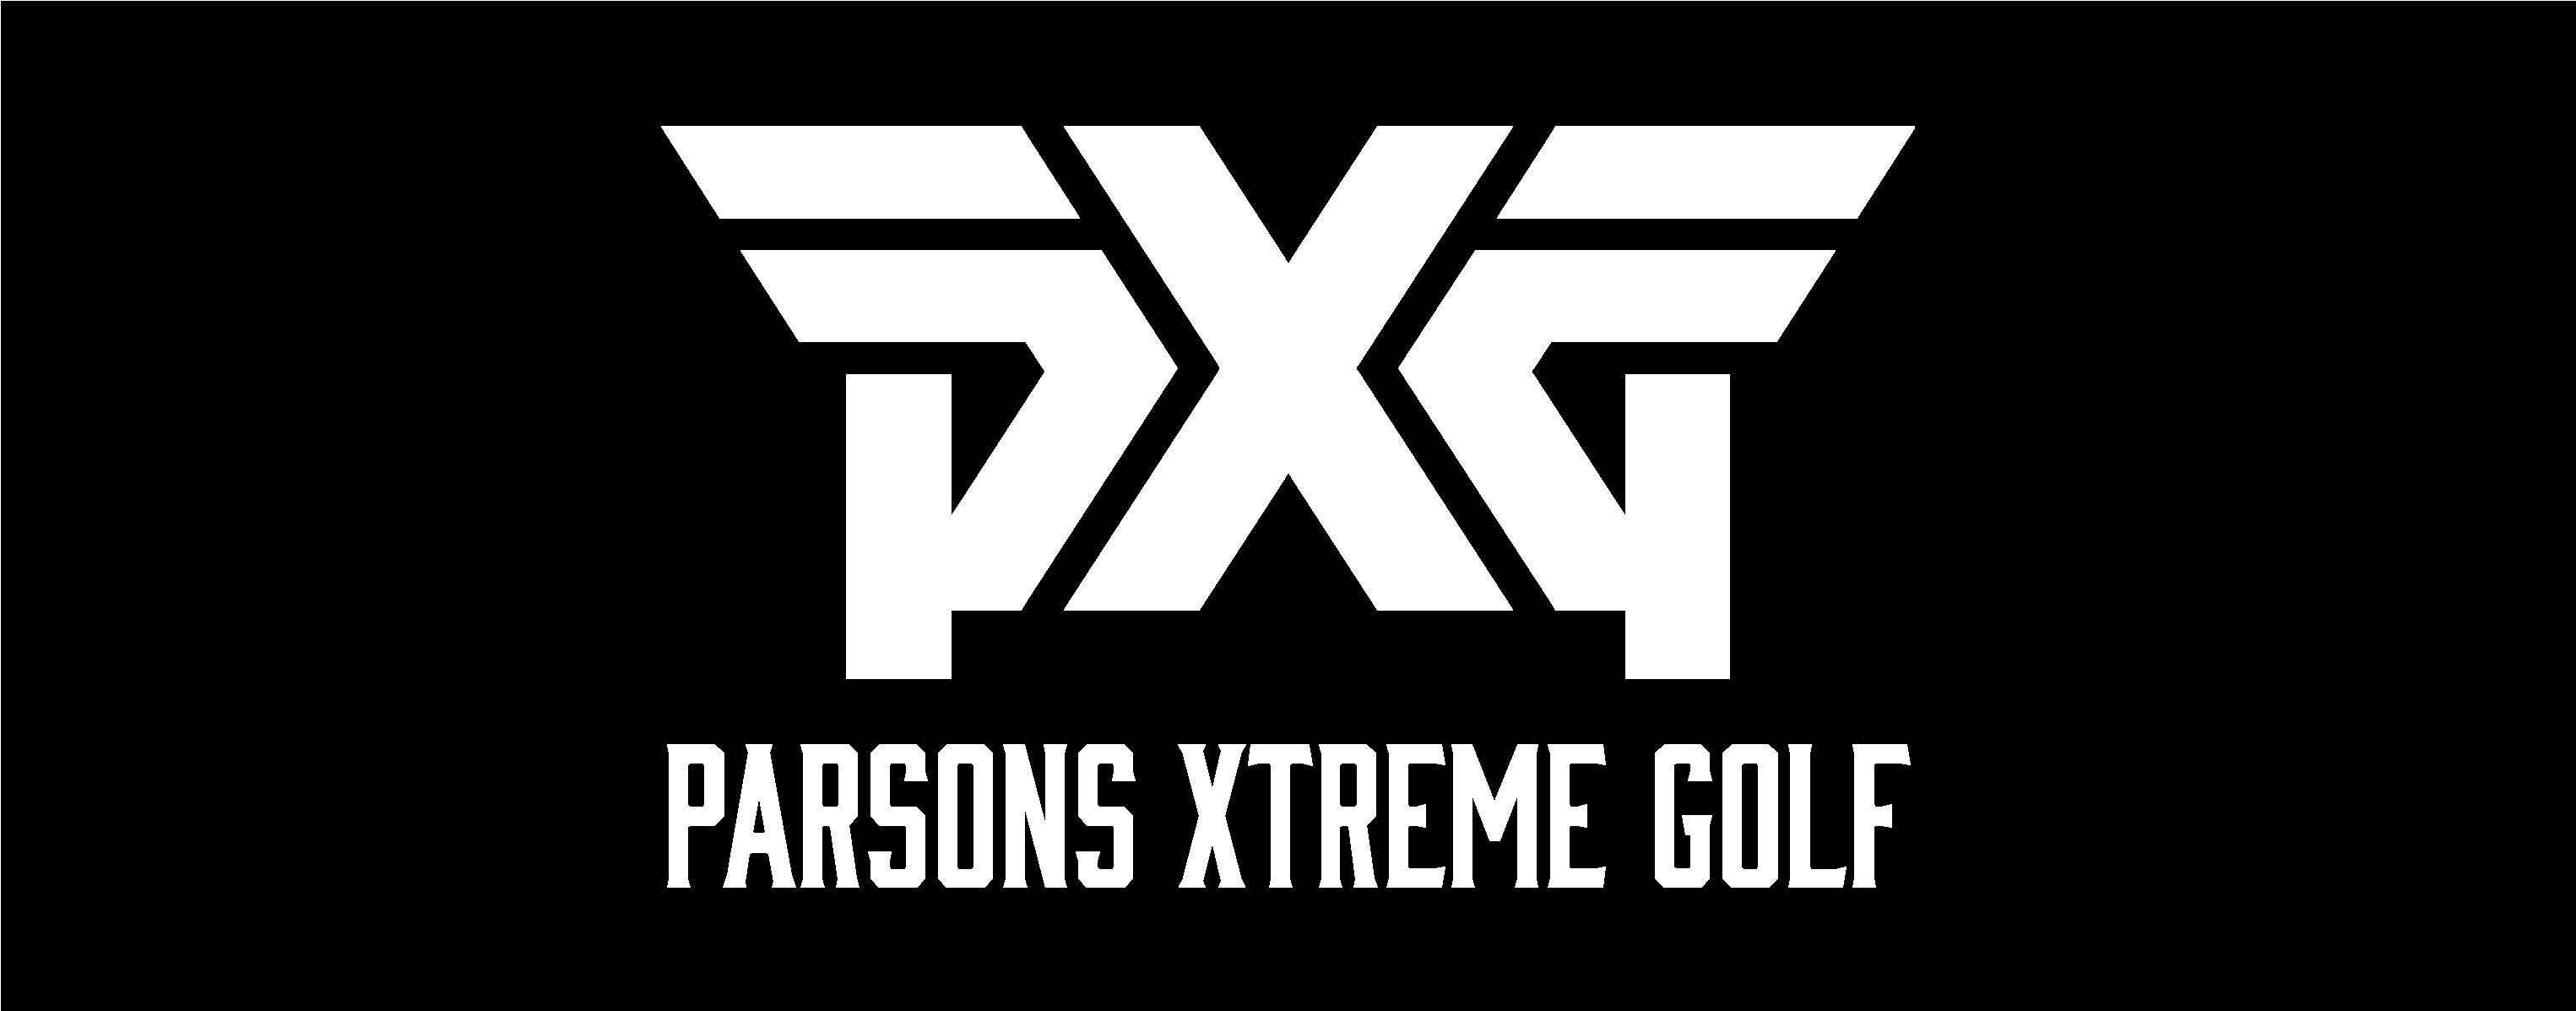 Pxg Logo - Core Golf | PXG | Parsons Xtreme Golf |